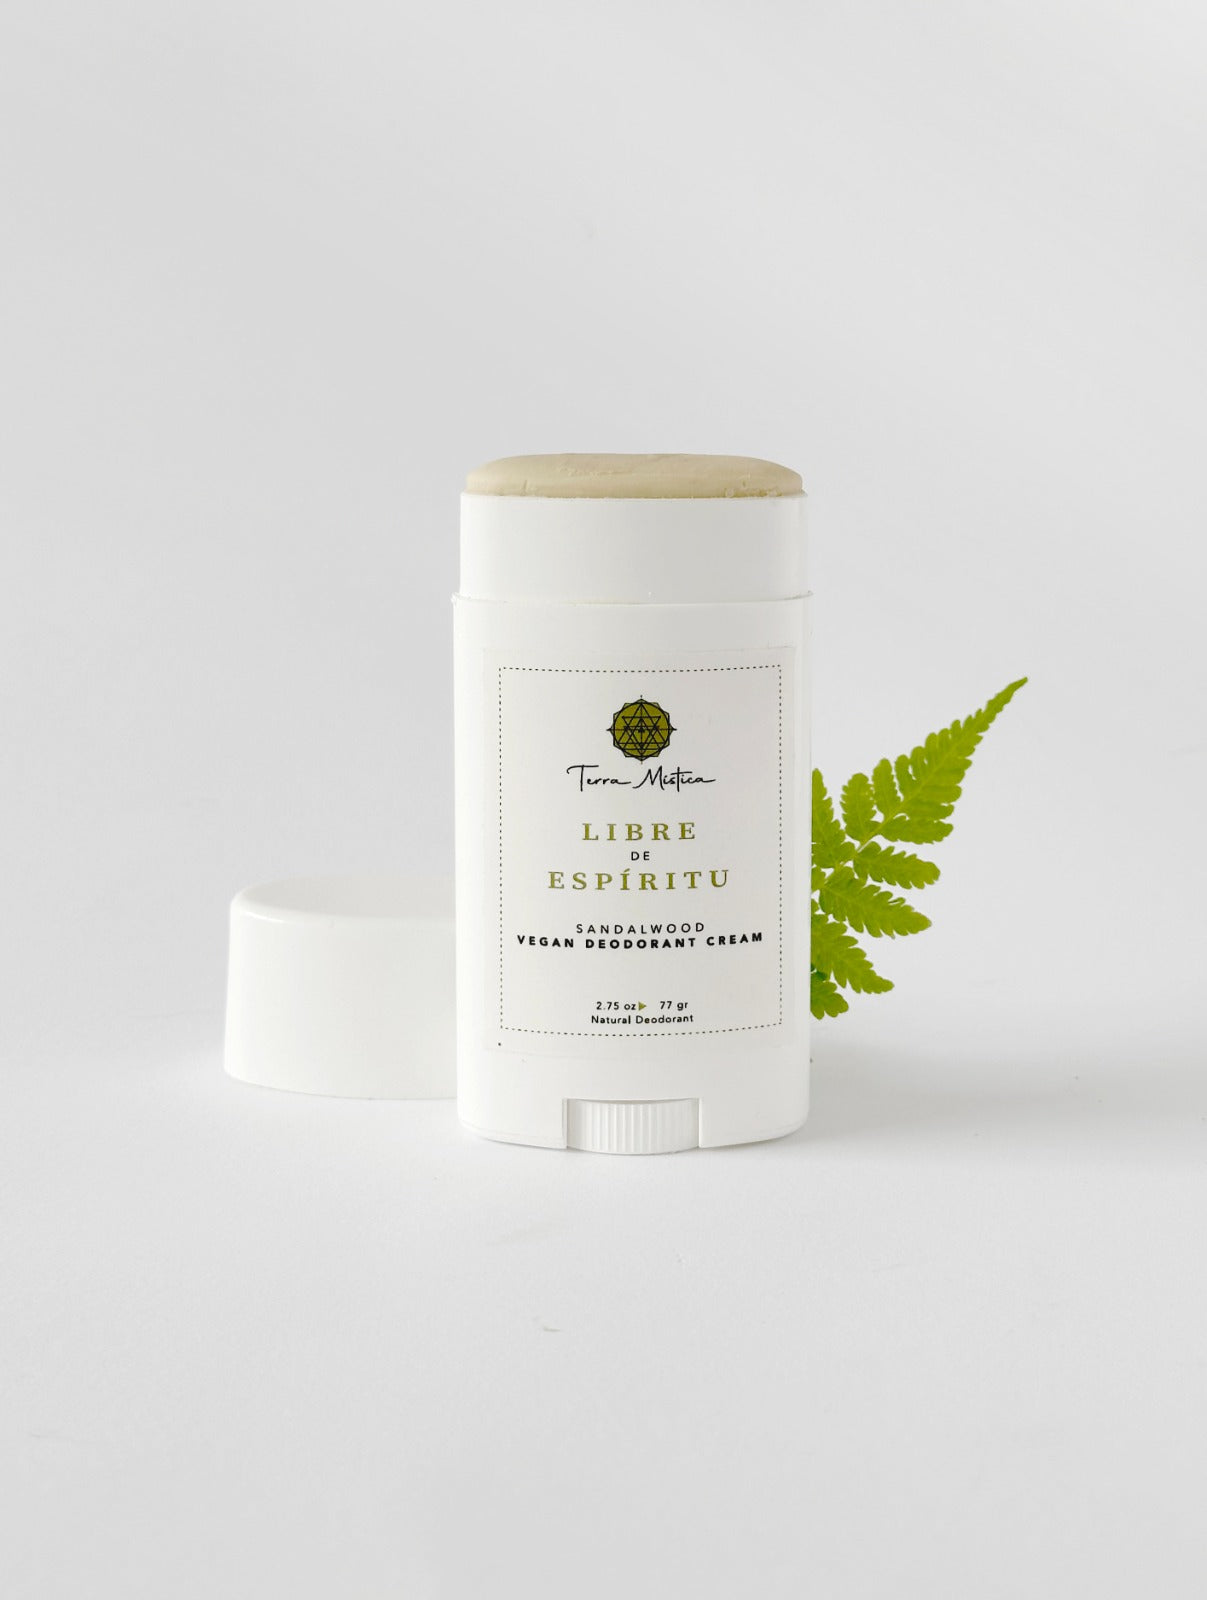 Desodorante Natural / Natural Deodorant Sandalwood - Lavander & Vanilla